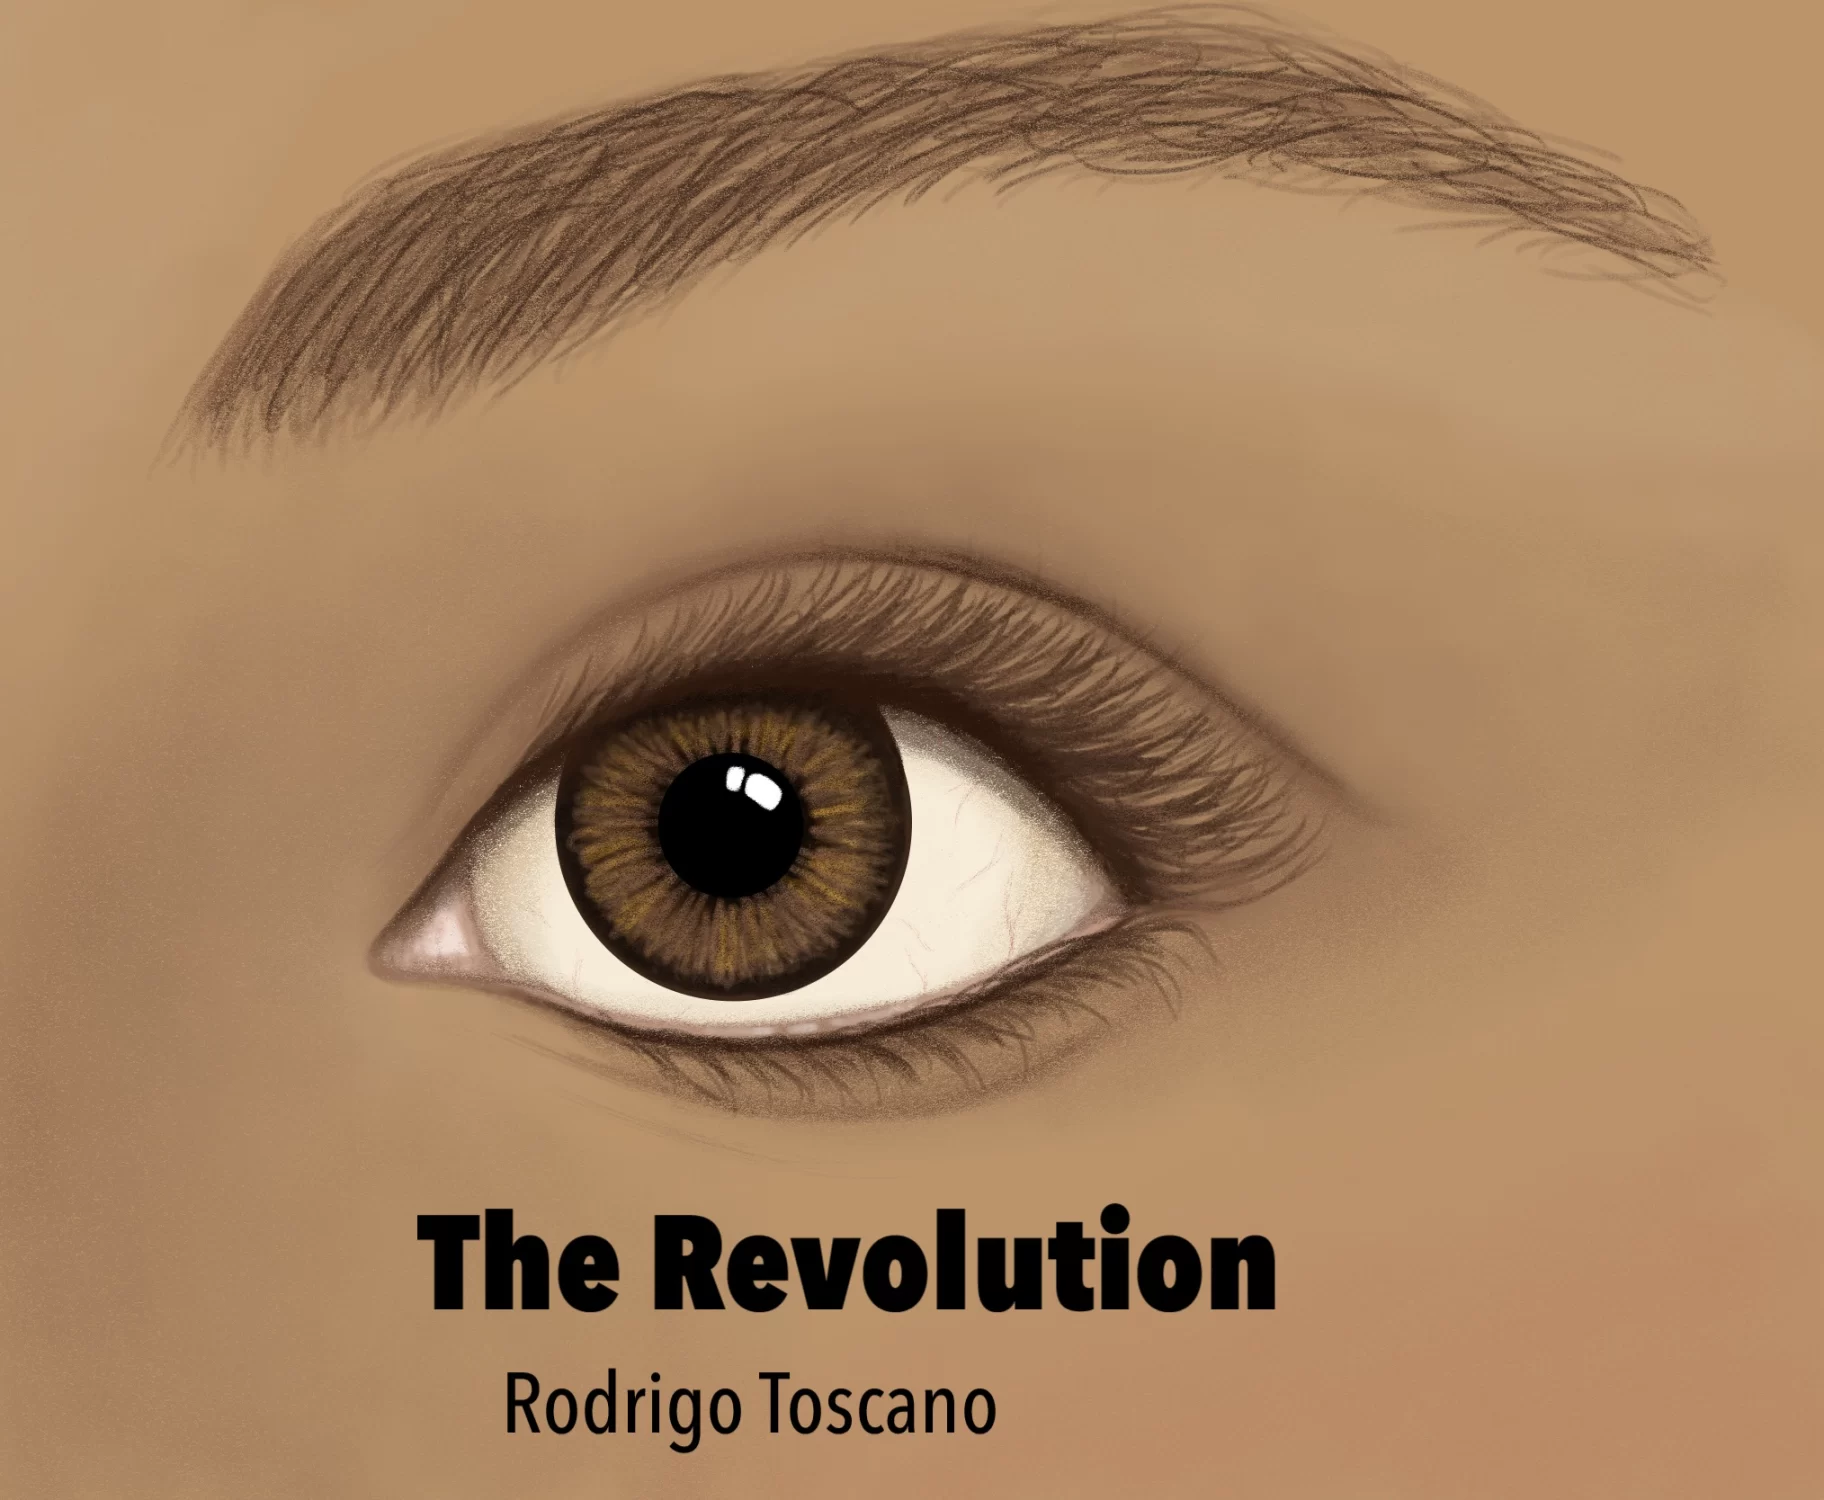 The Revolution by Rodrigo Toscano